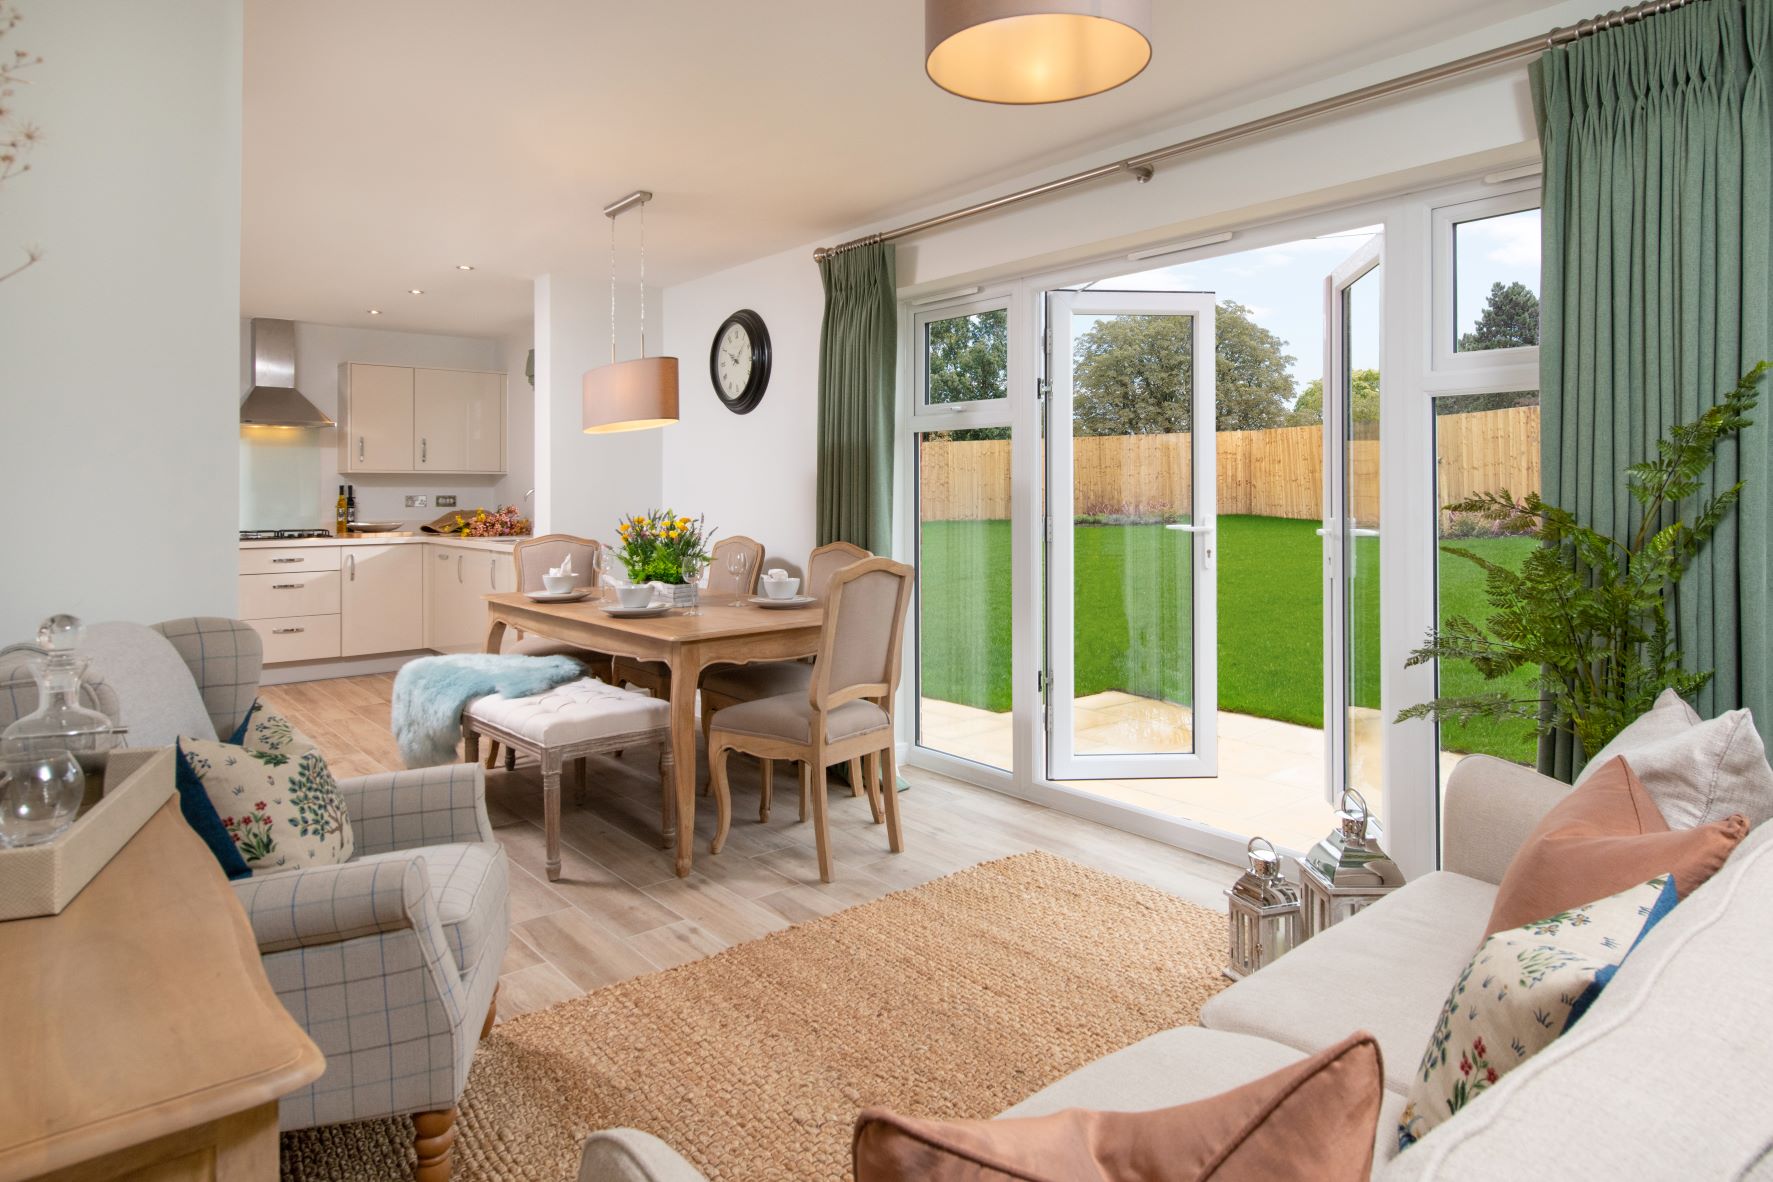 Bellway Set to Launch New Housing Development in Bedworth